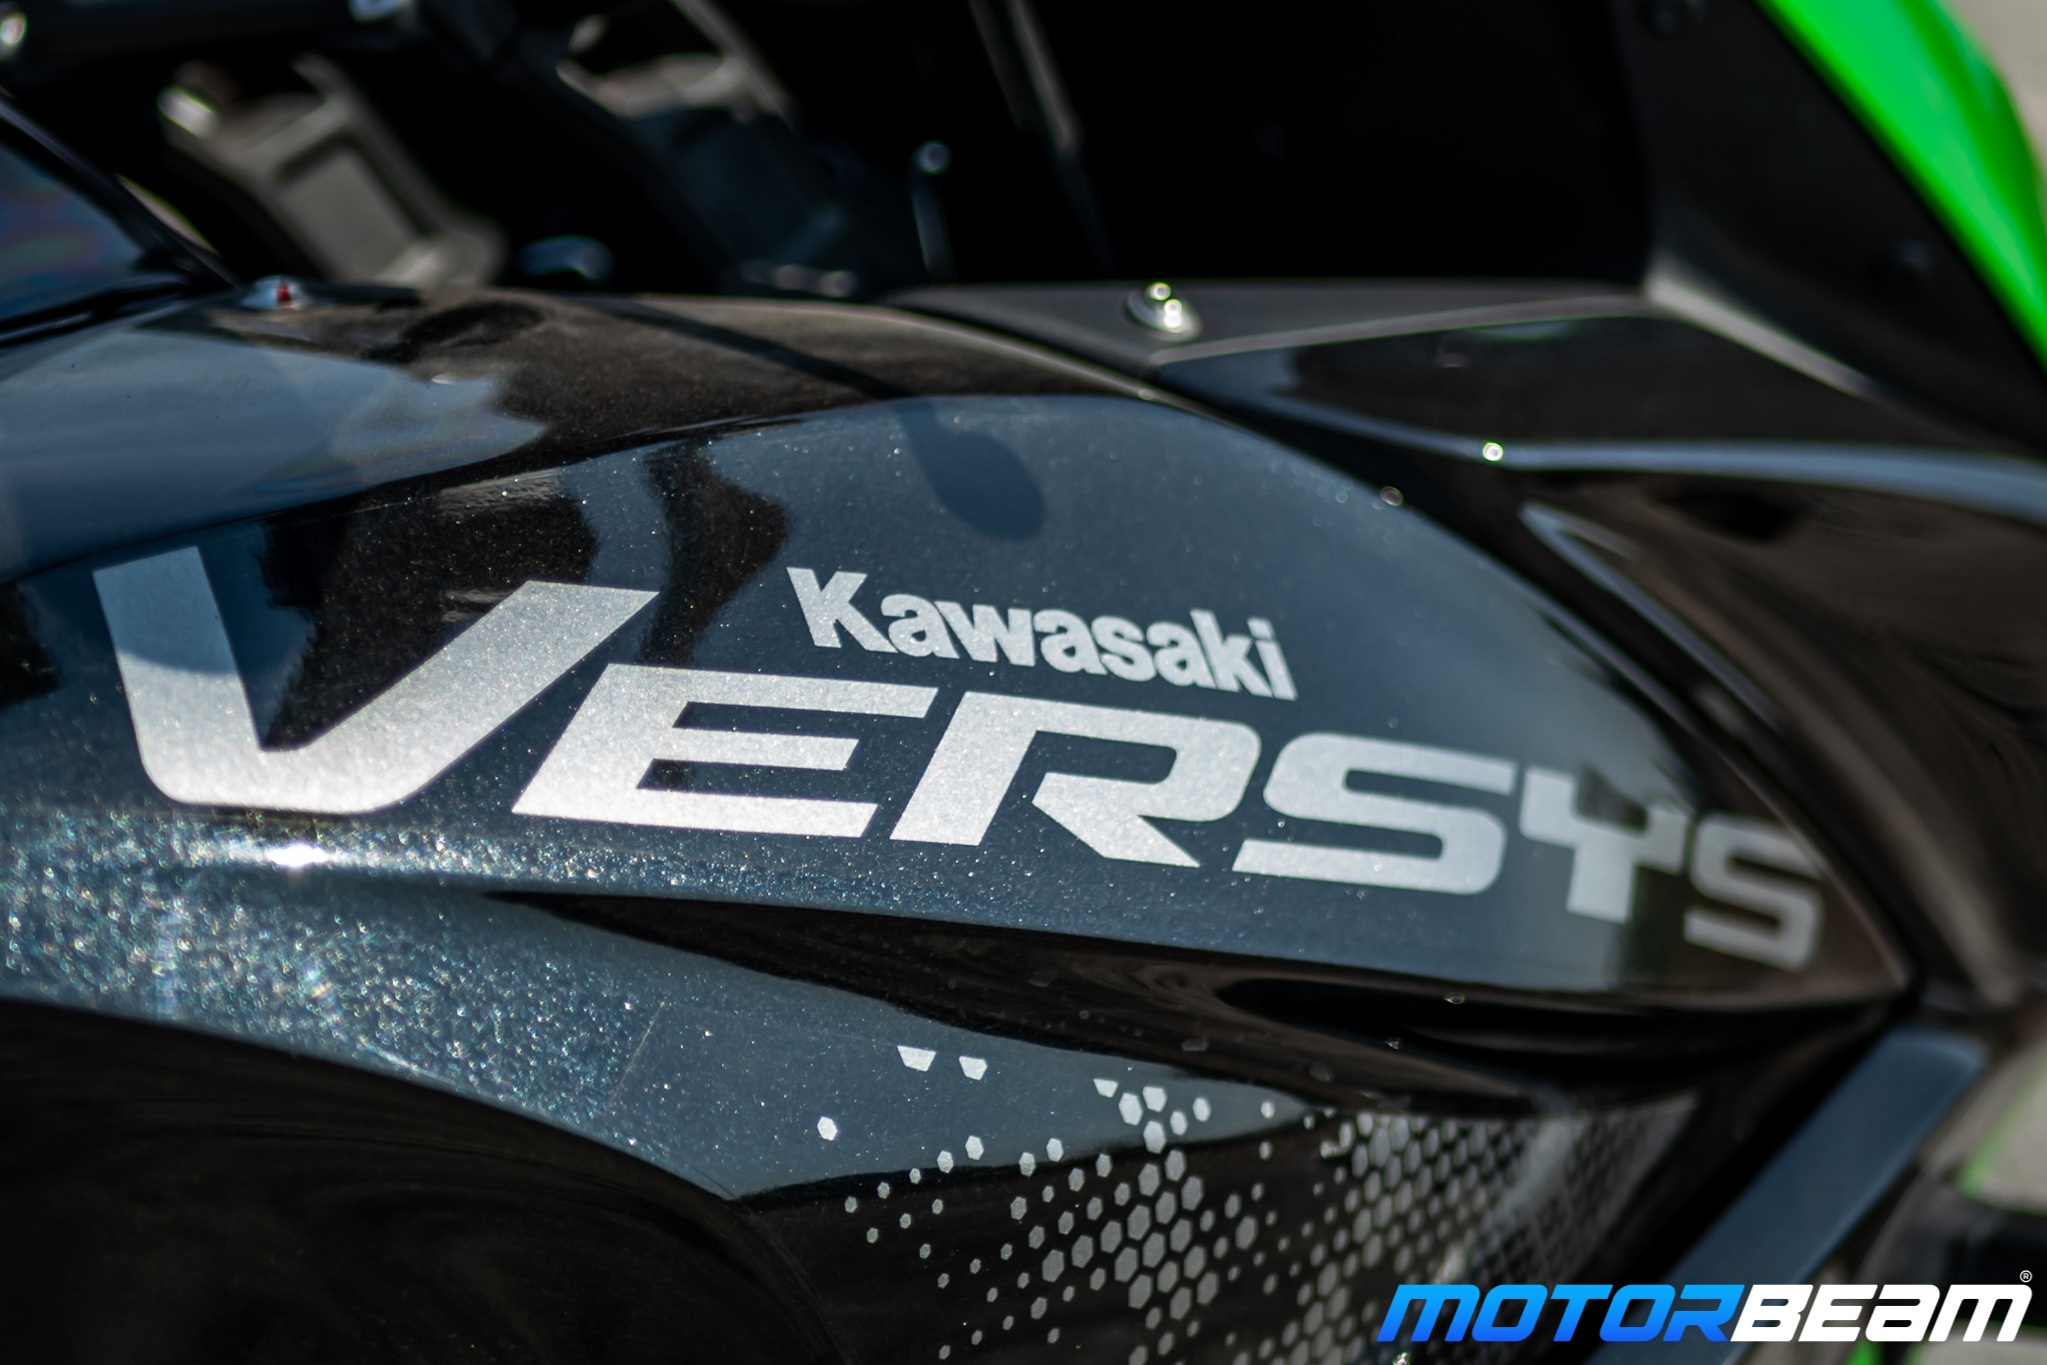 2021 Kawasaki Versys 650 Review 9